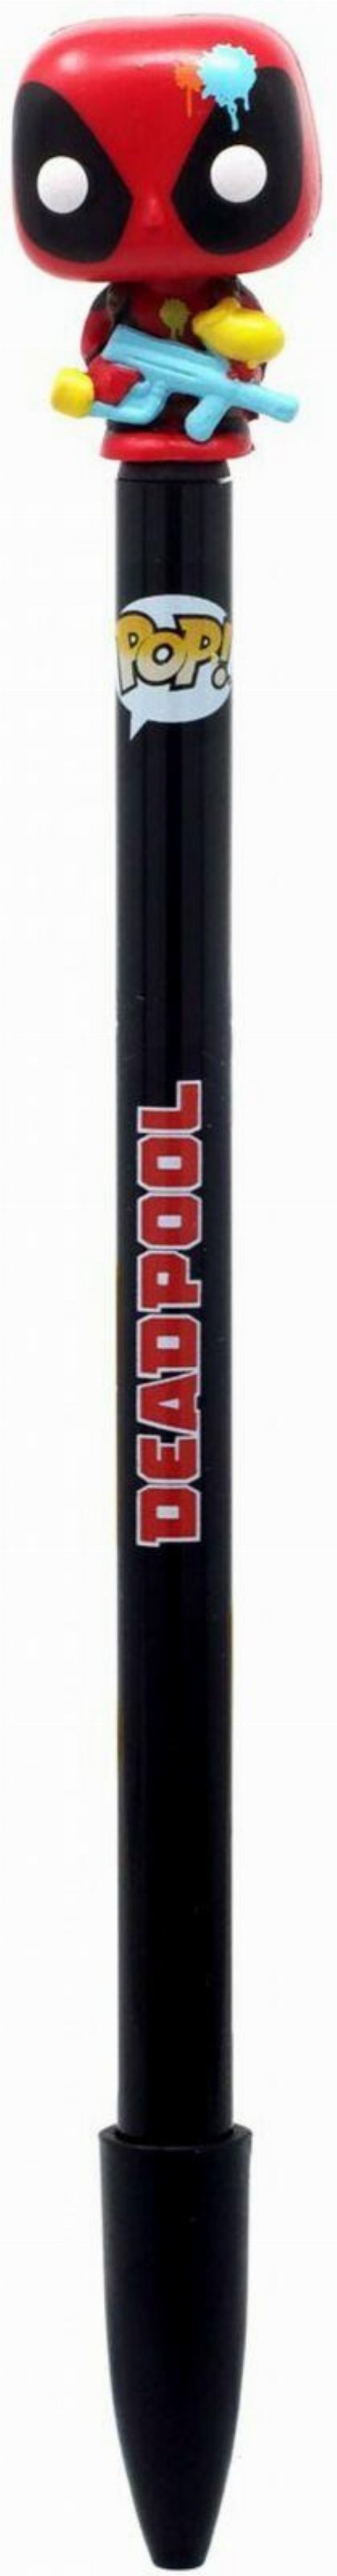 Funko POP! Pen με Topper Marvel - Paintball Deadpool
Φιγούρα